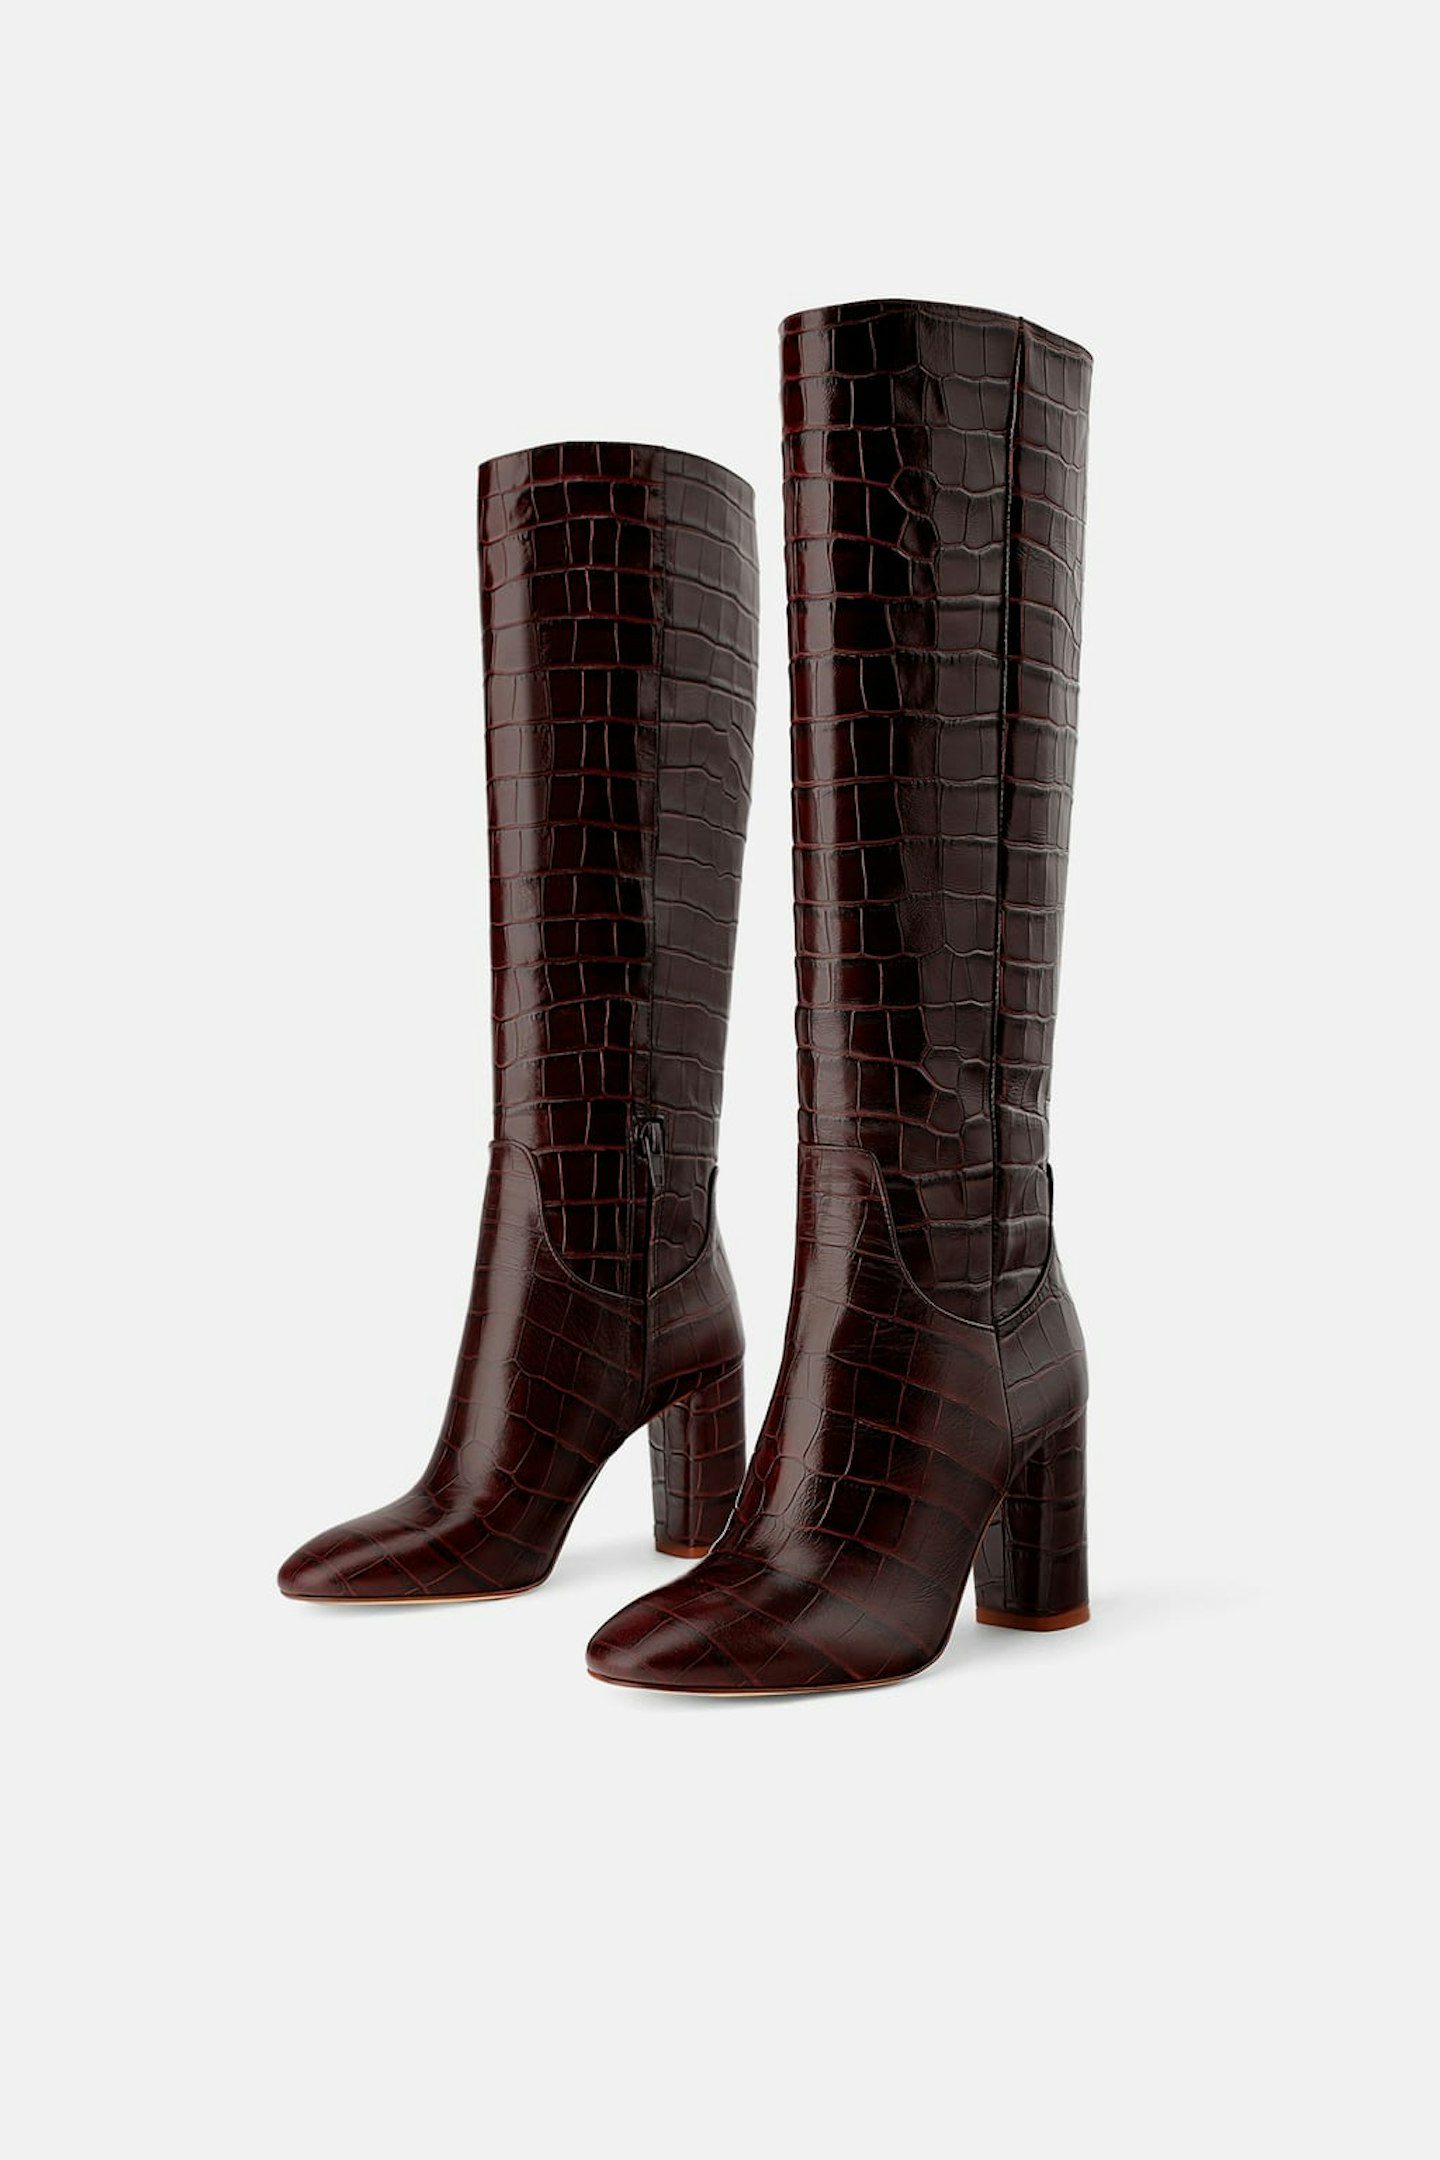 Zara, Animal Print Heeled Boots, WERE £149 NOW £89.99